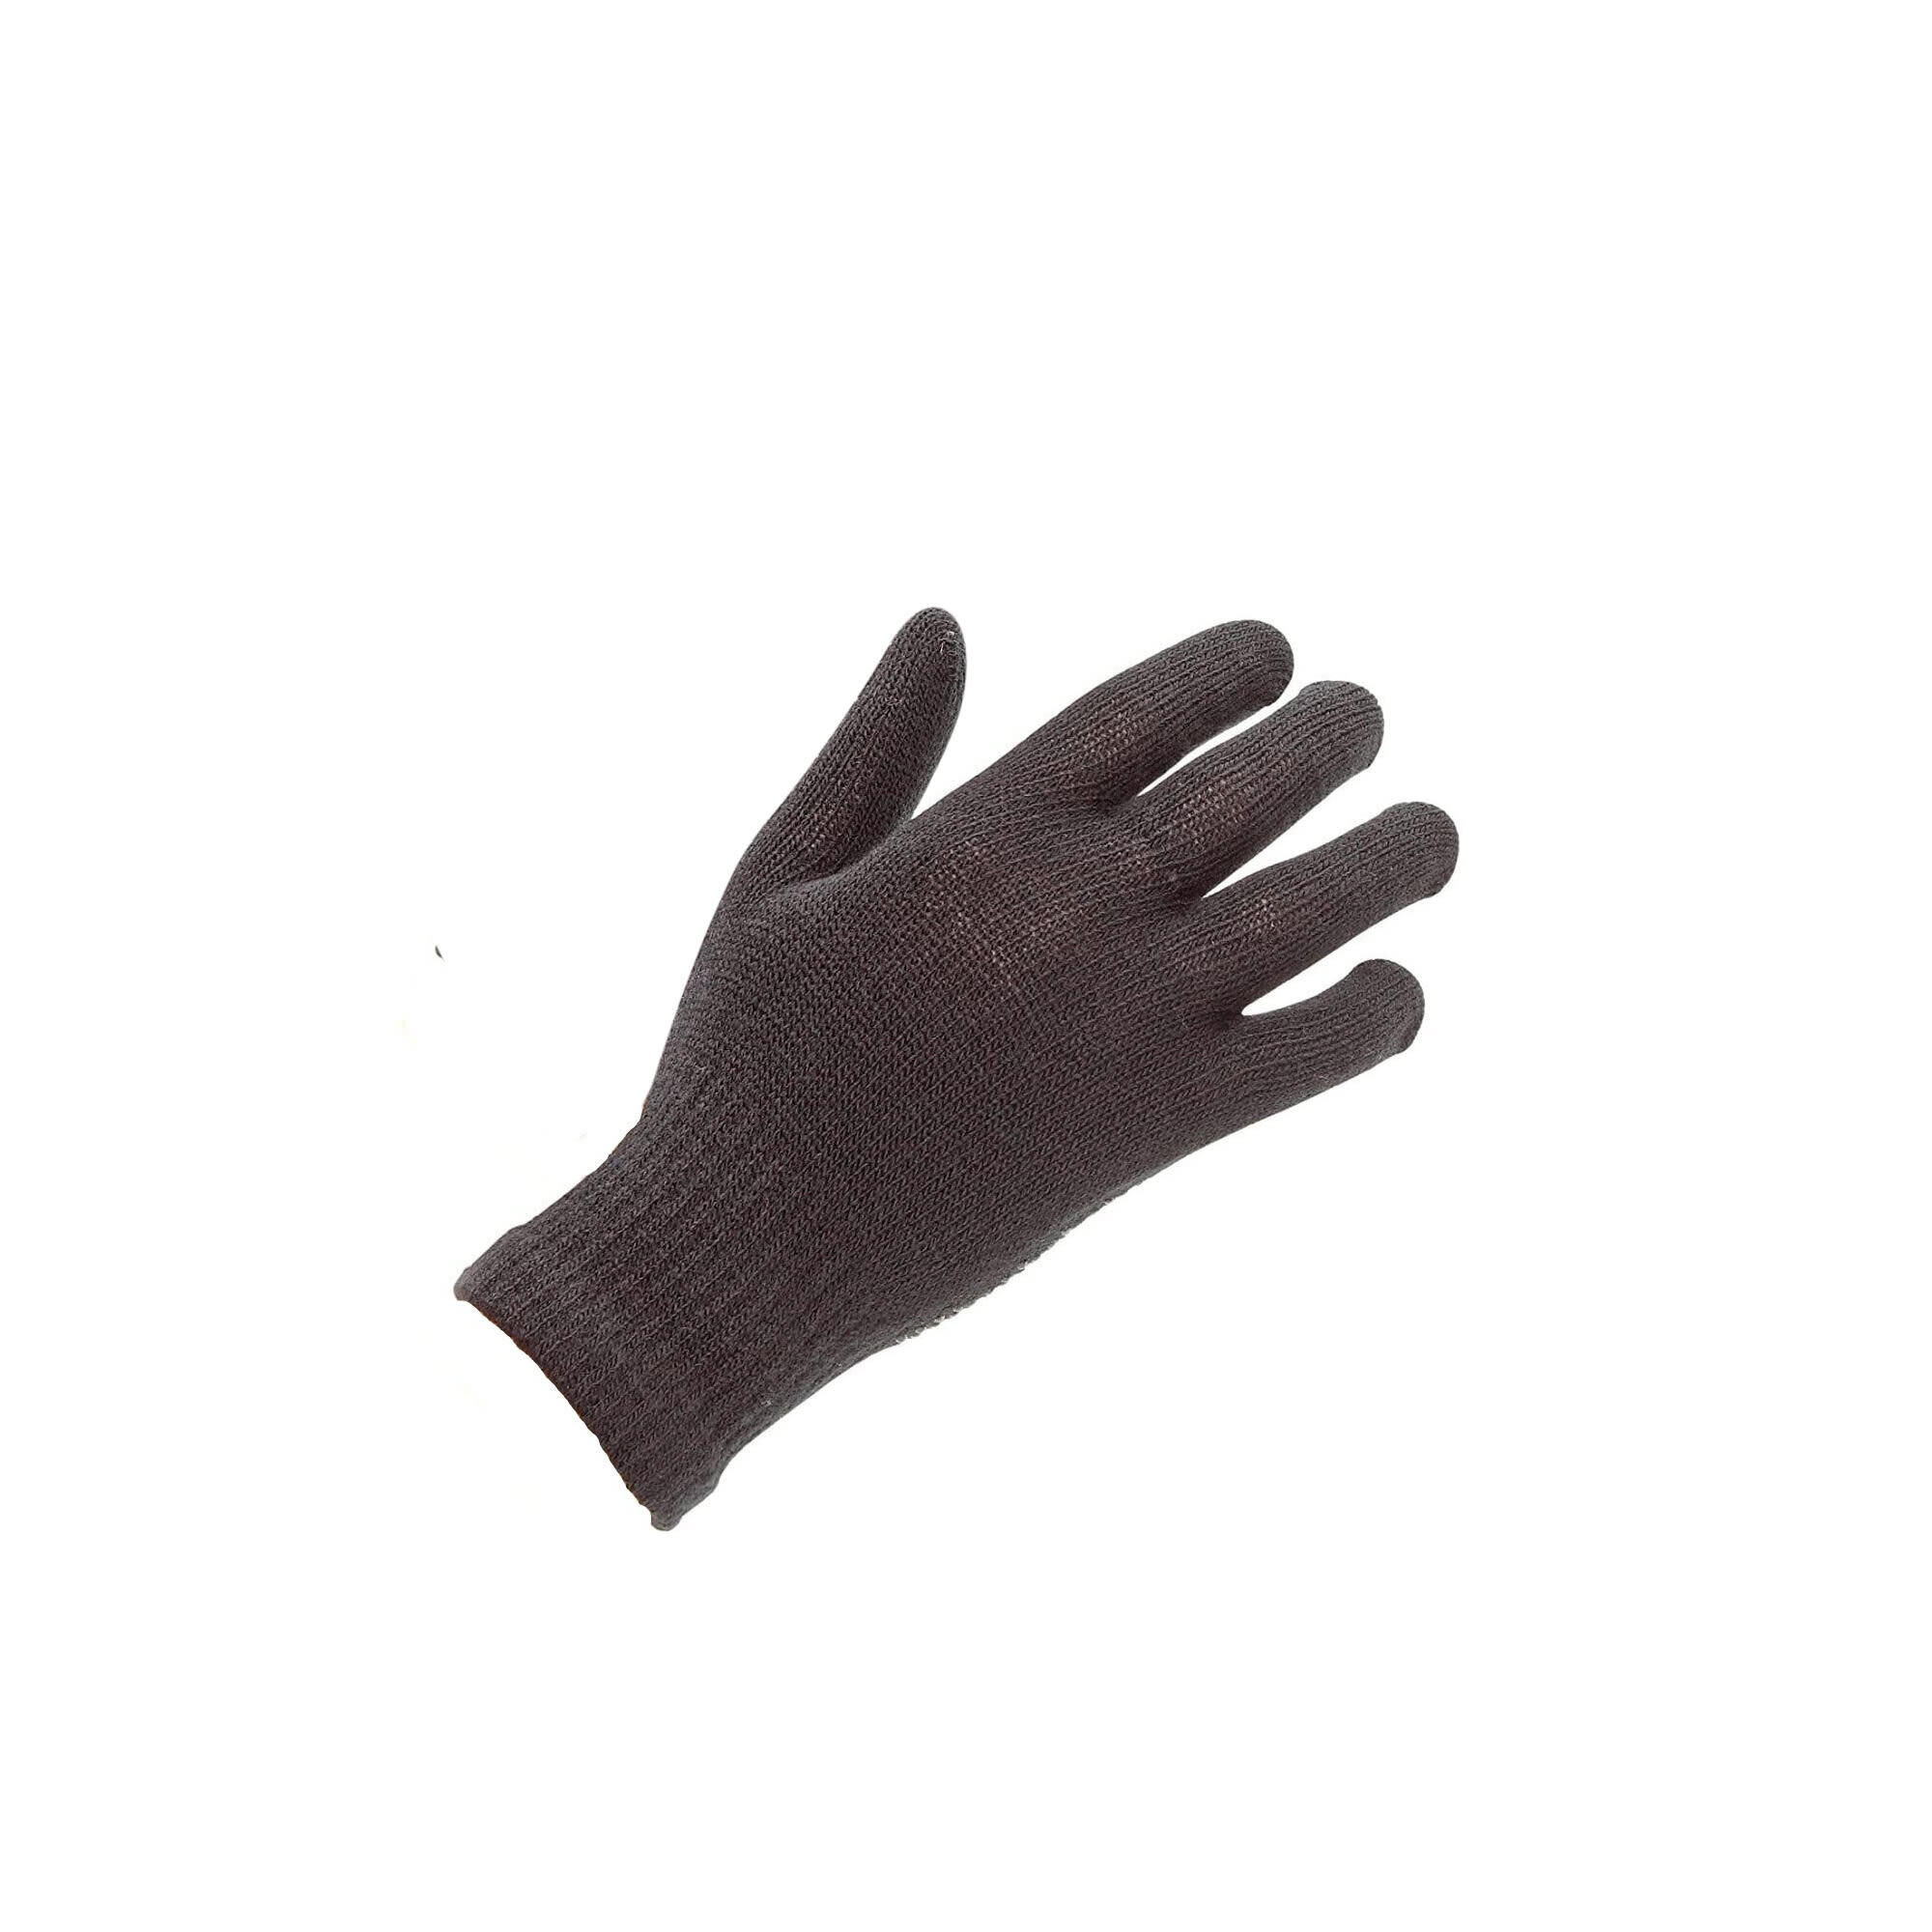 SHIRES Unisex Adult Suregrip Riding Gloves (Black)